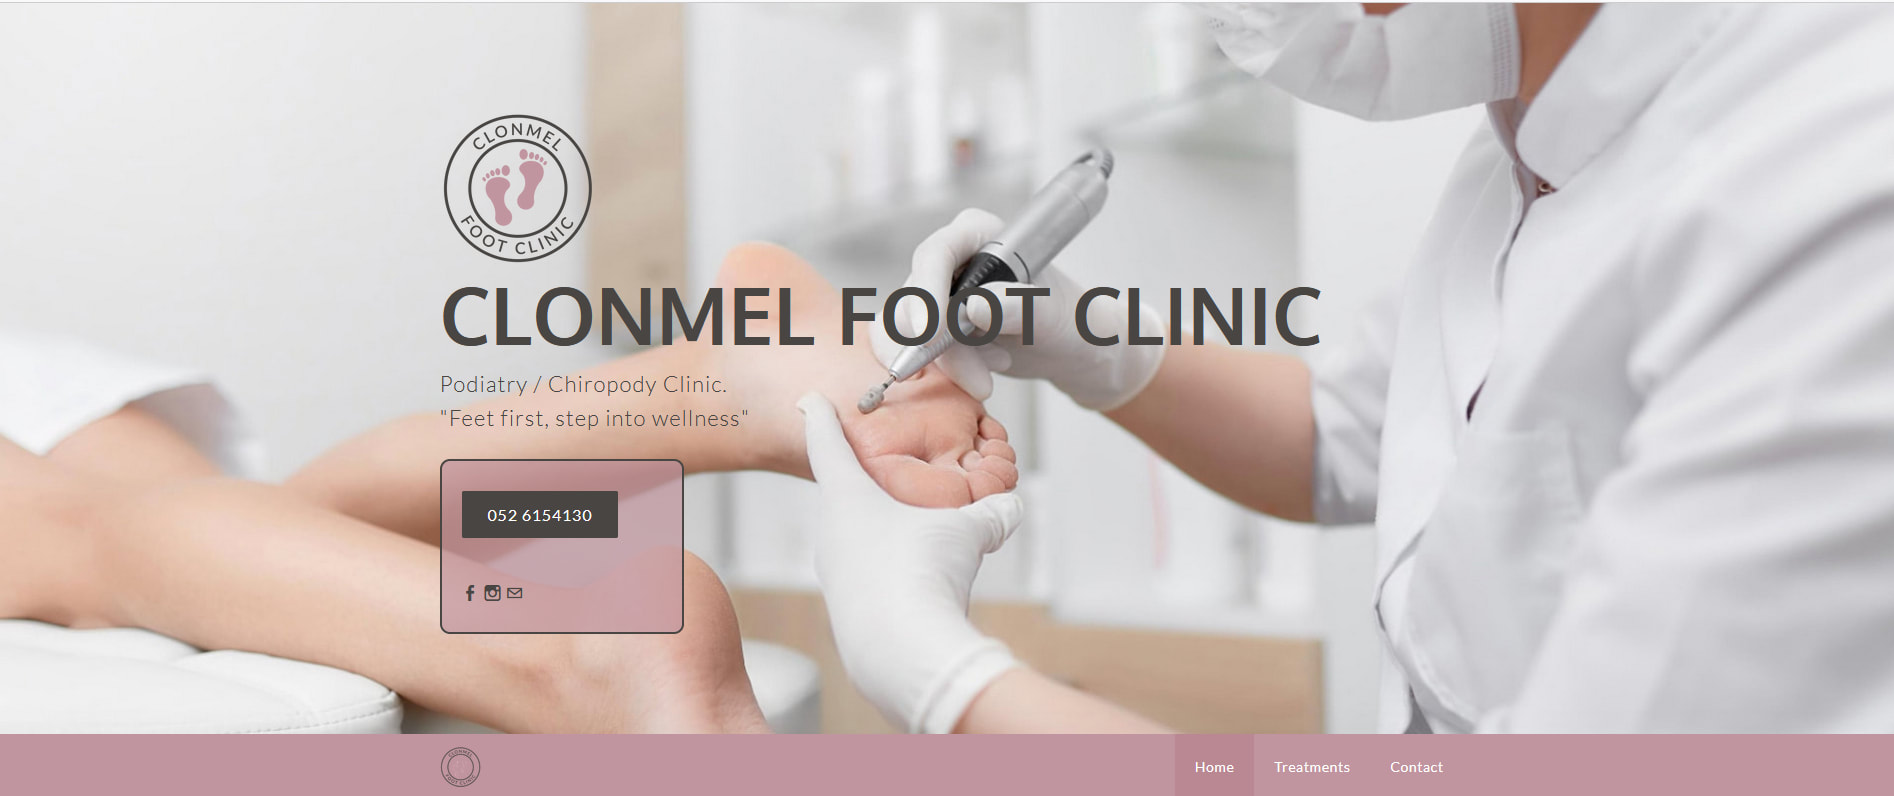 clonmel website design